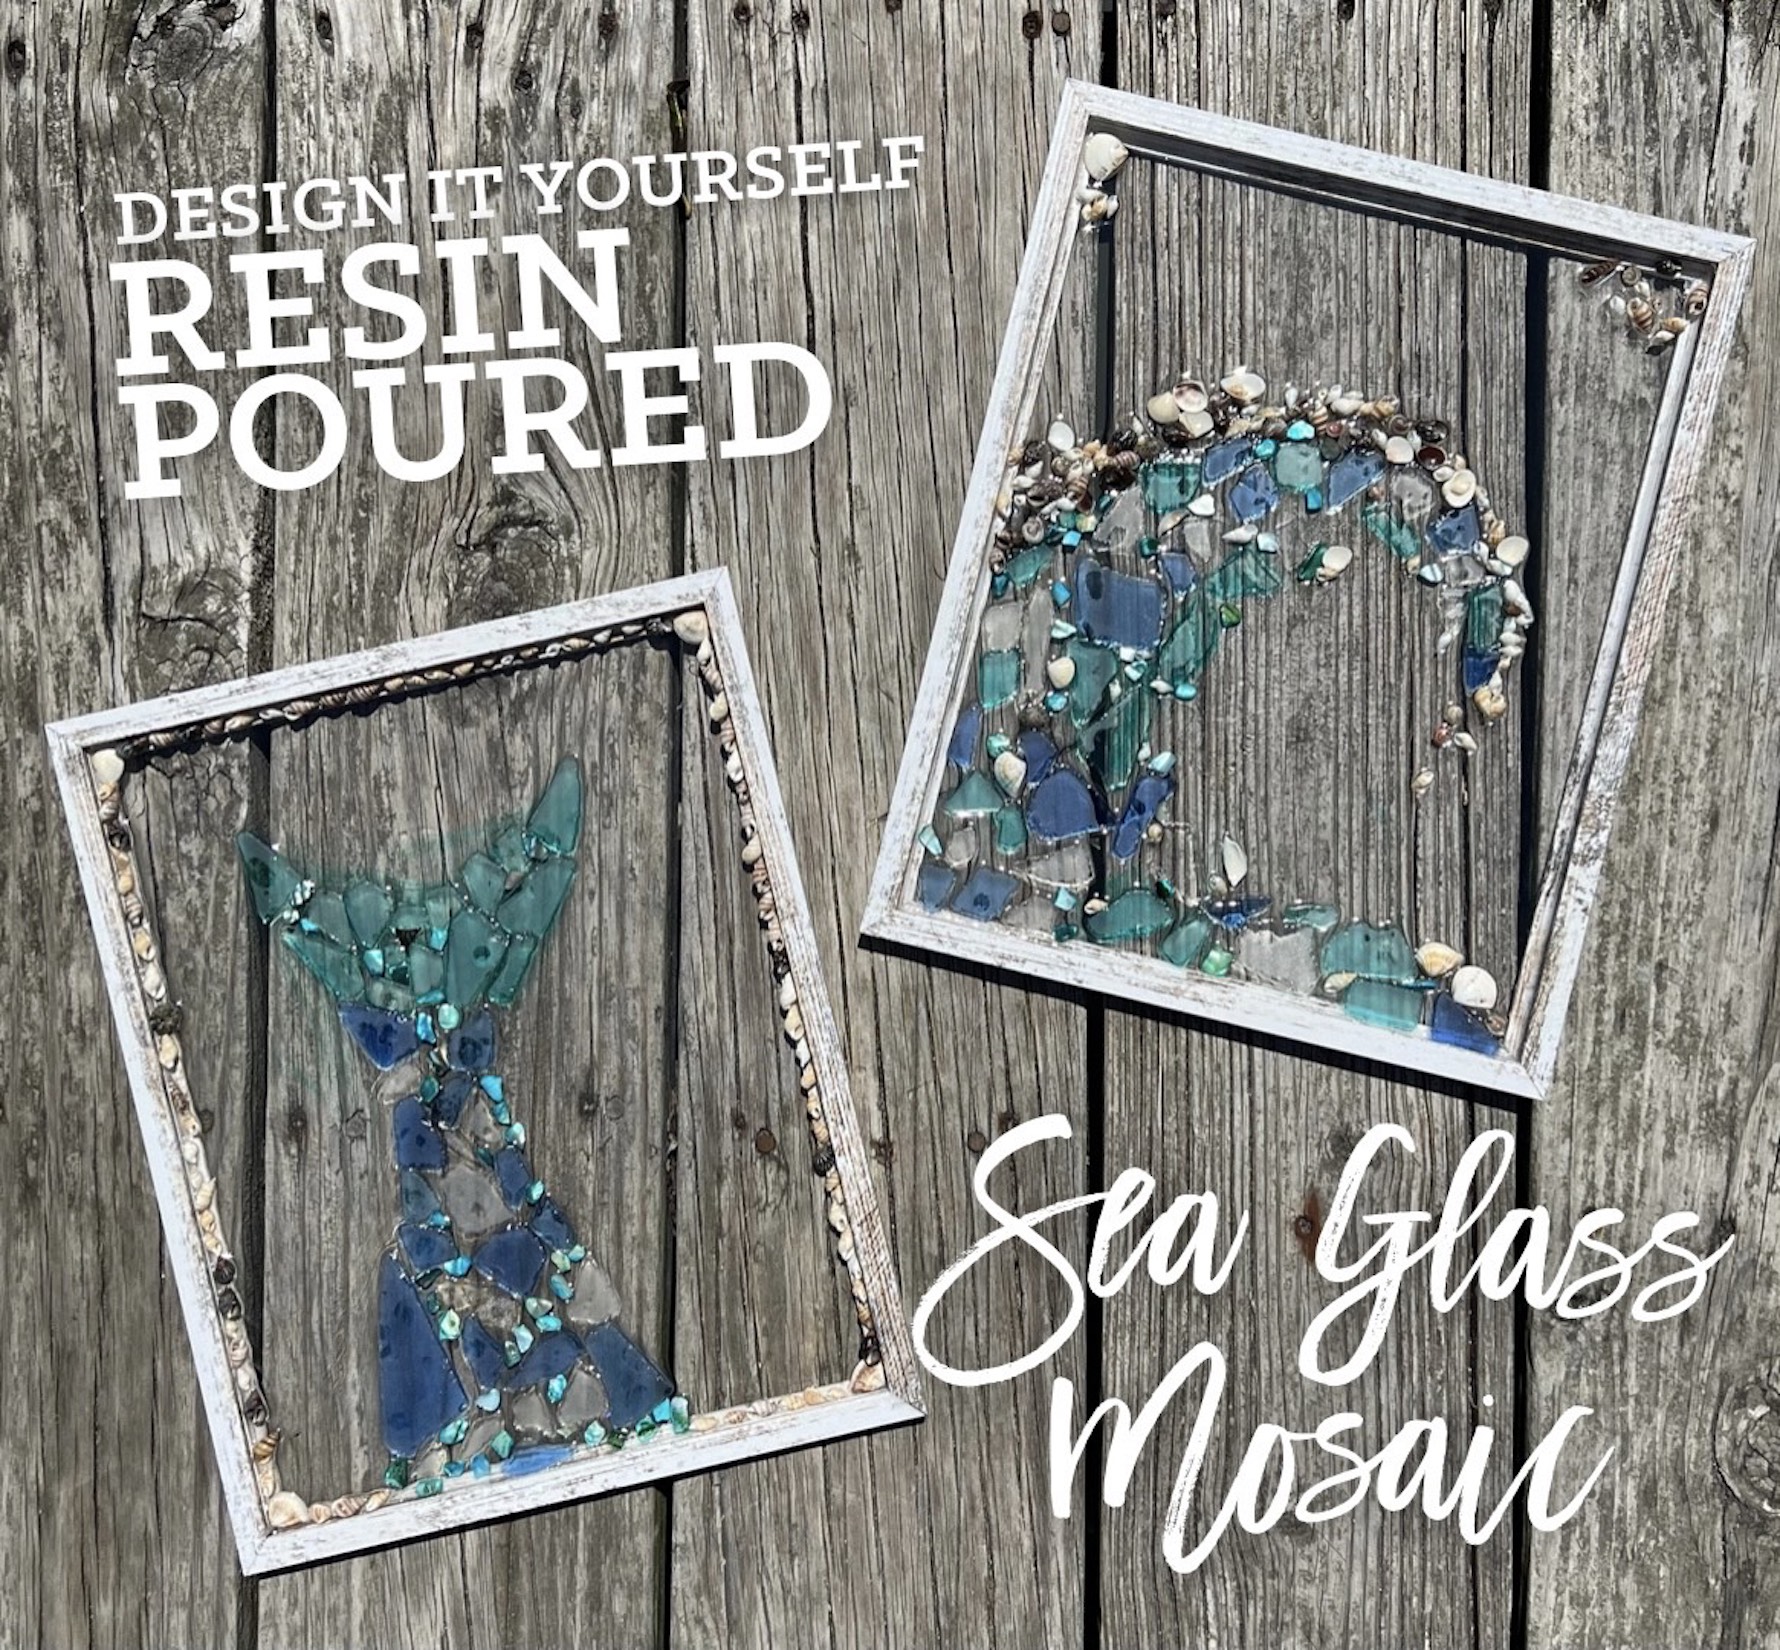 Resin Poured Sea Glass Mosaics!